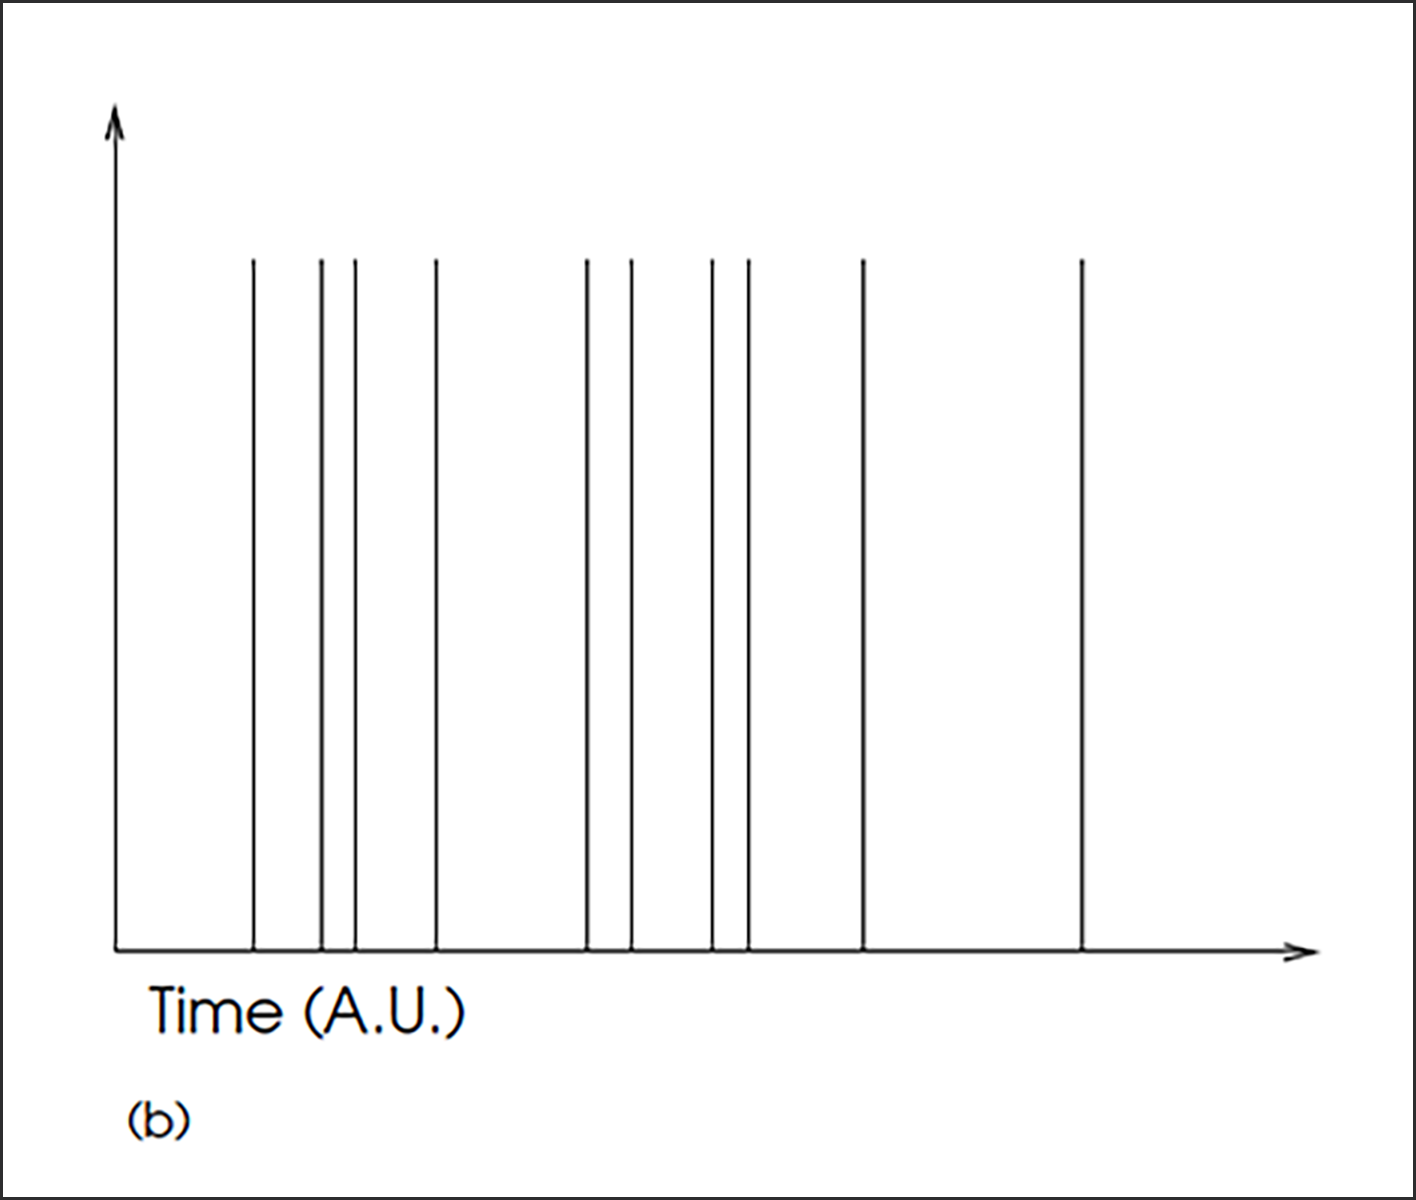 Figure 5: Output voltage versus time